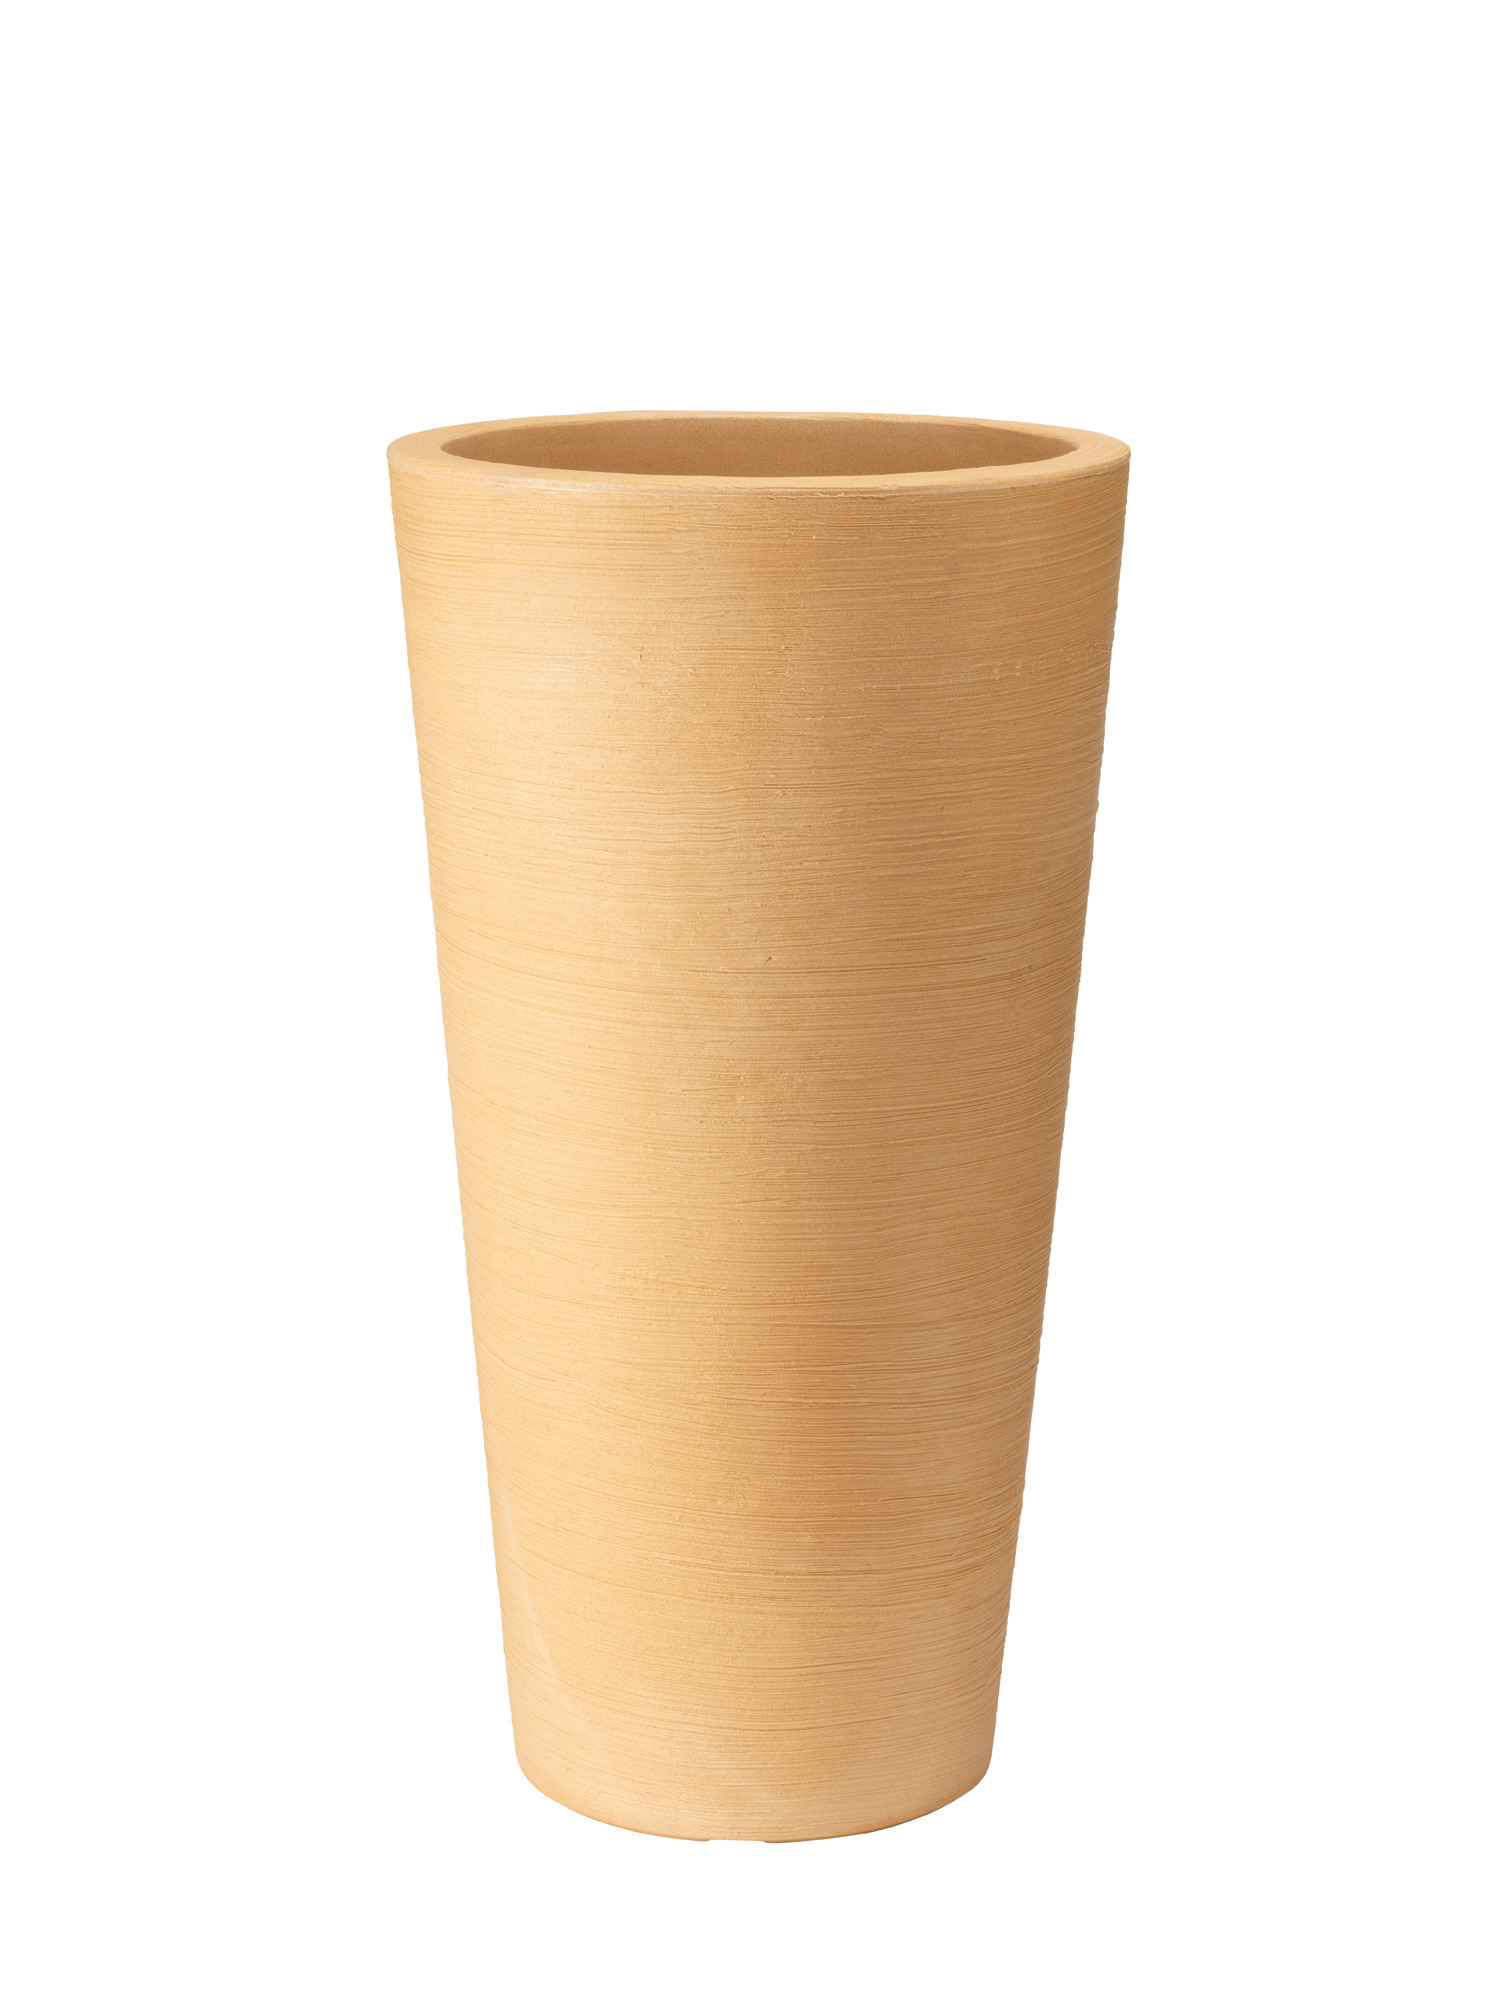 Stewart 40cm Varese Tall Vase Sandstone